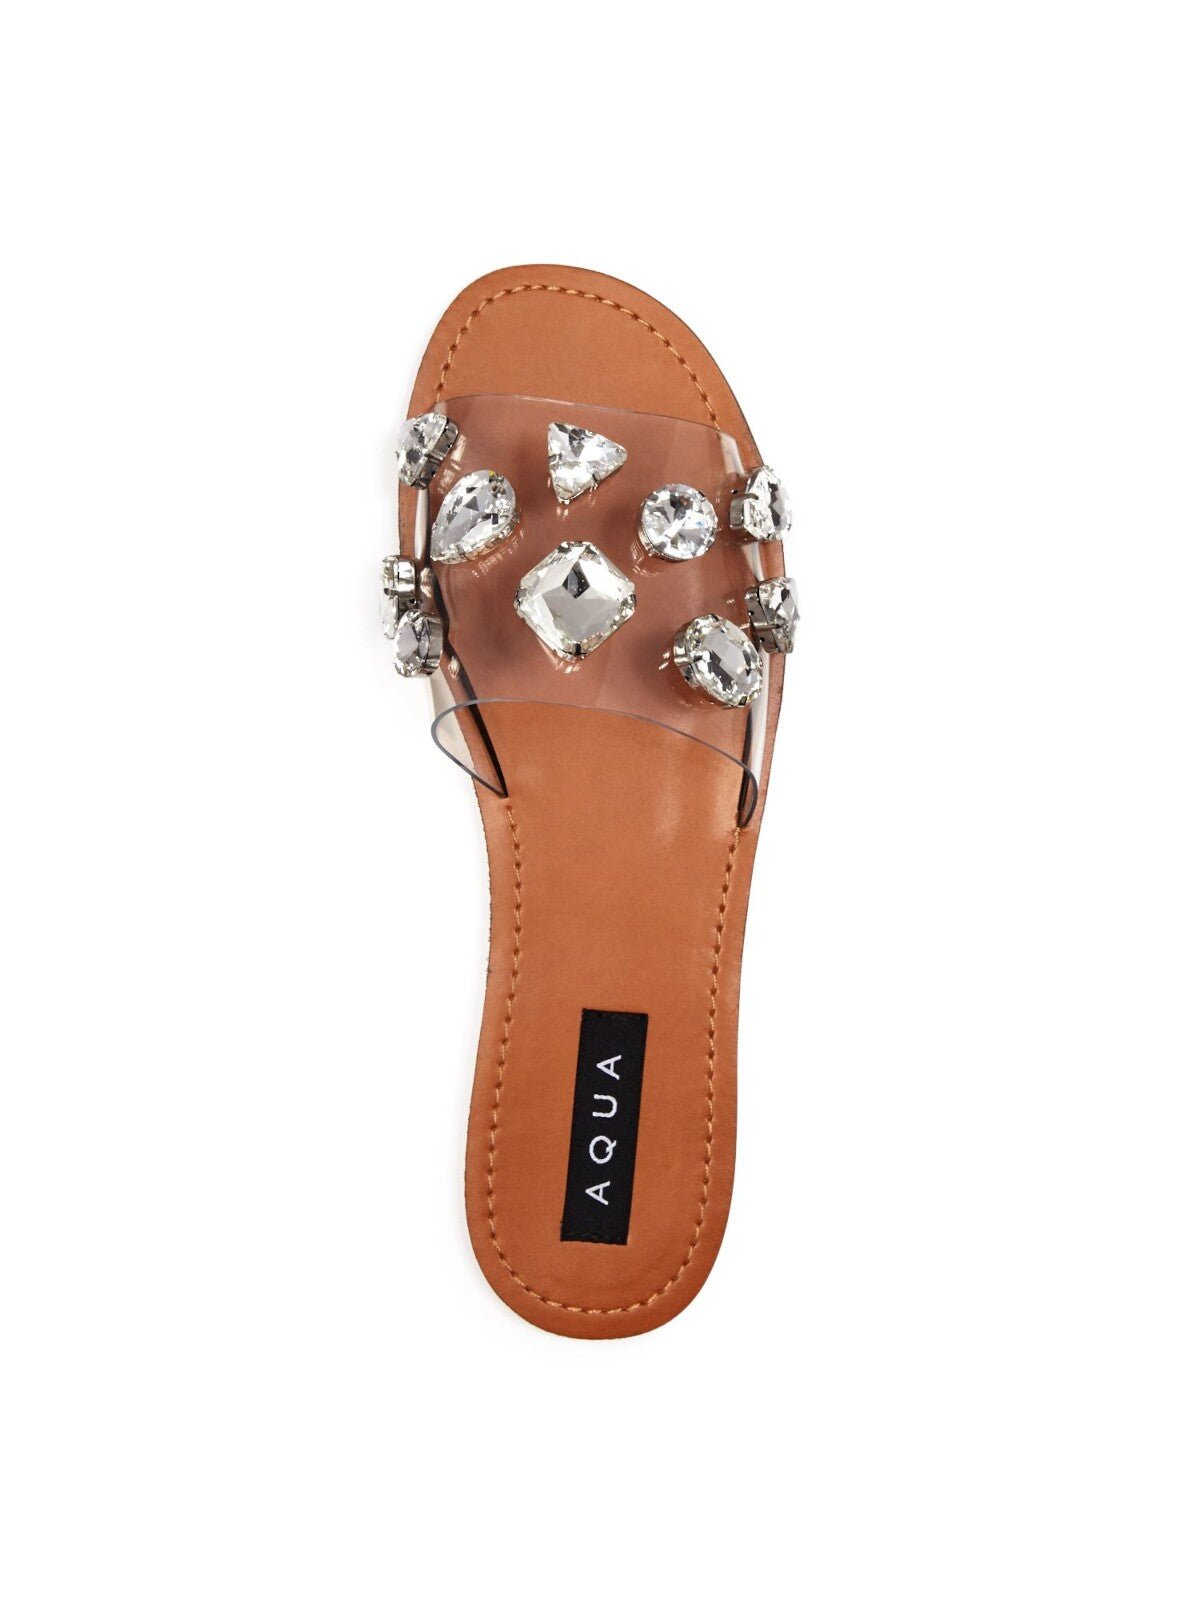 AQUA Womens Brown Translucent Strap Rhinestone Twink Round Toe Slip On Slide Sandals Shoes 6.5 M